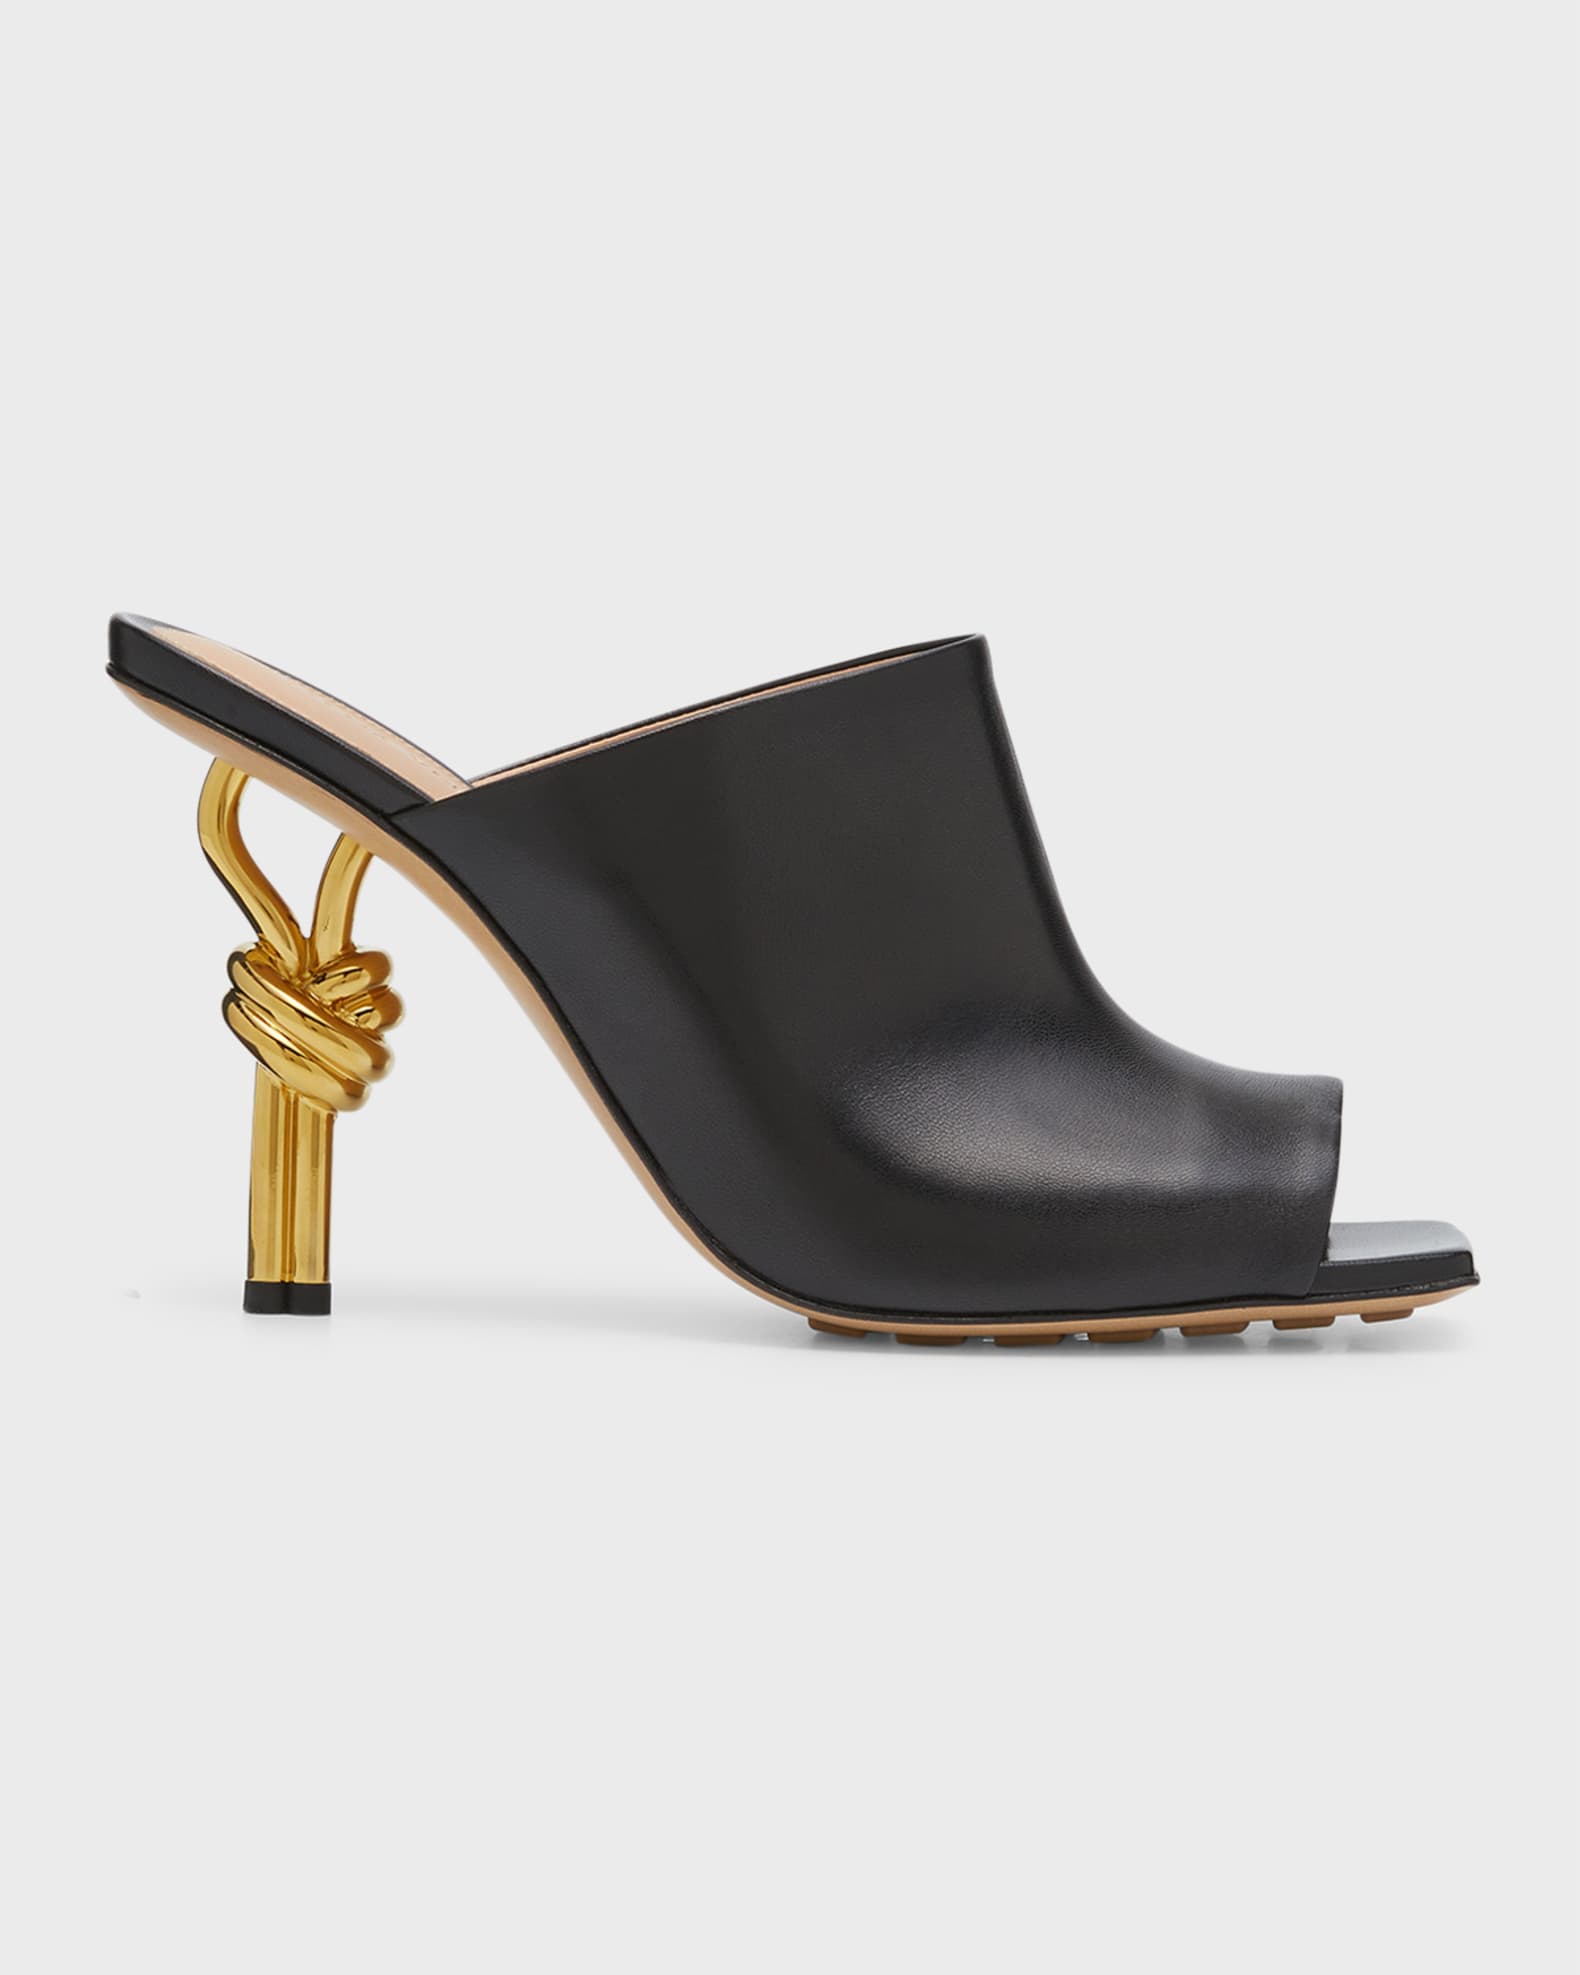 Bottega Veneta Knot Leather Heeled Sandals | Neiman Marcus